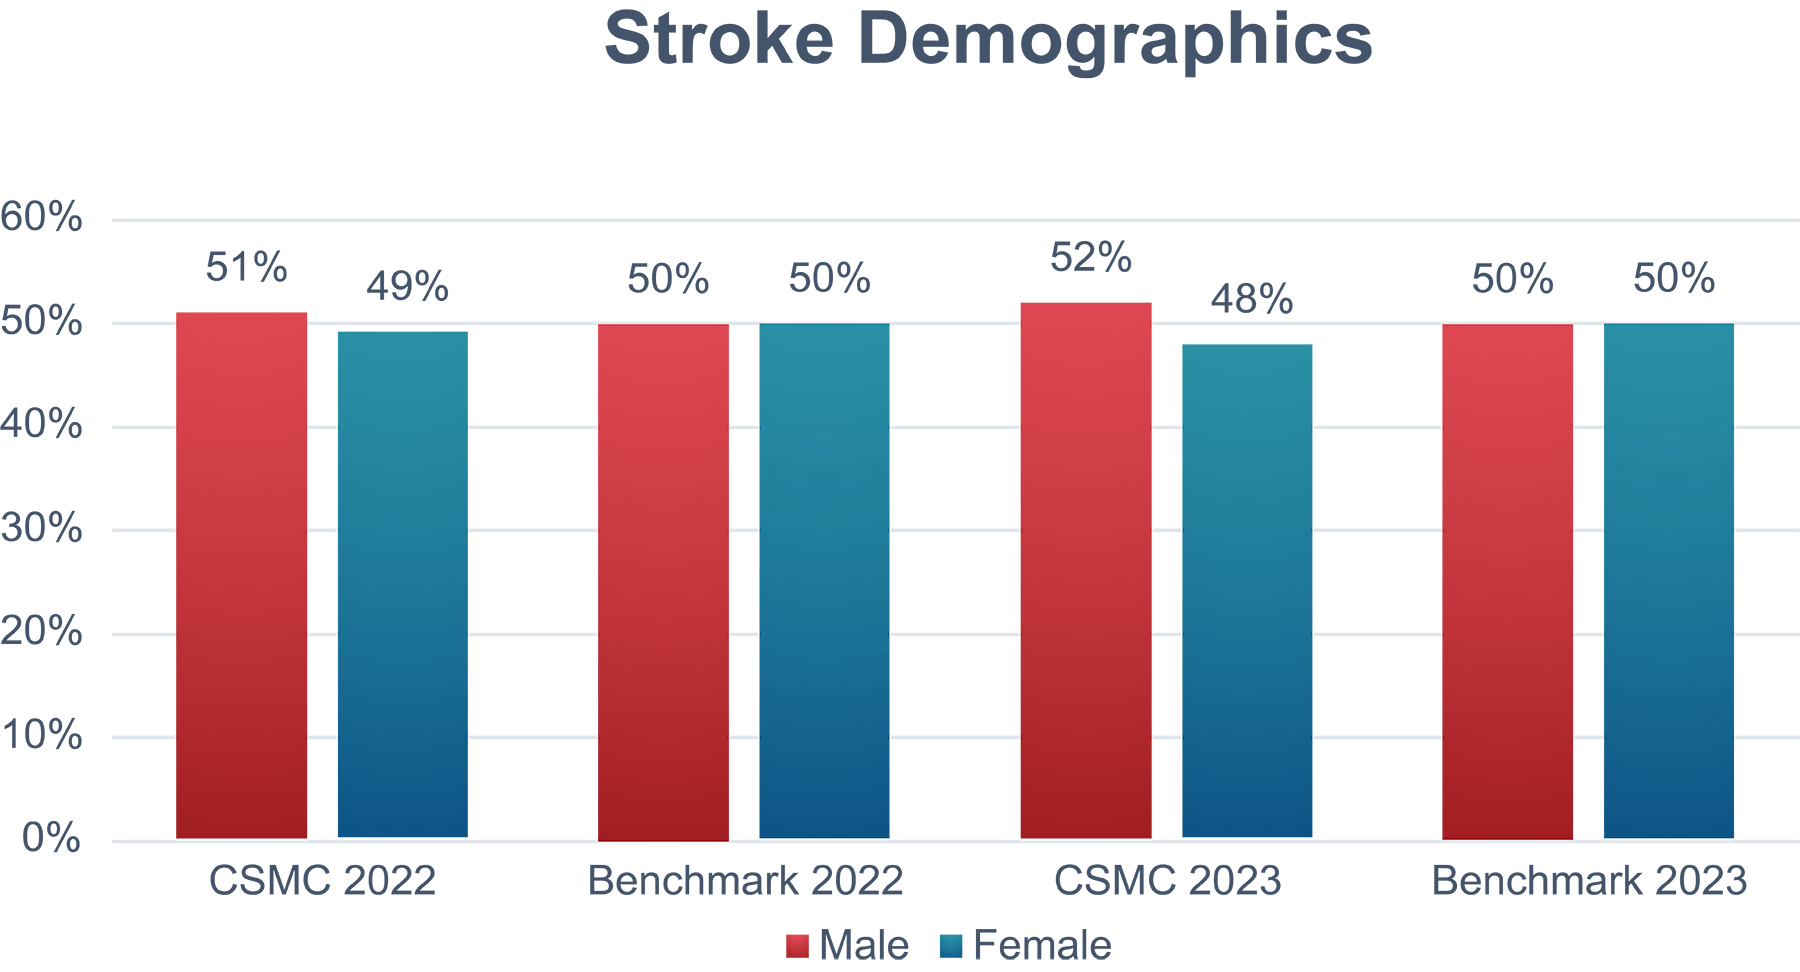 Stroke Demographics